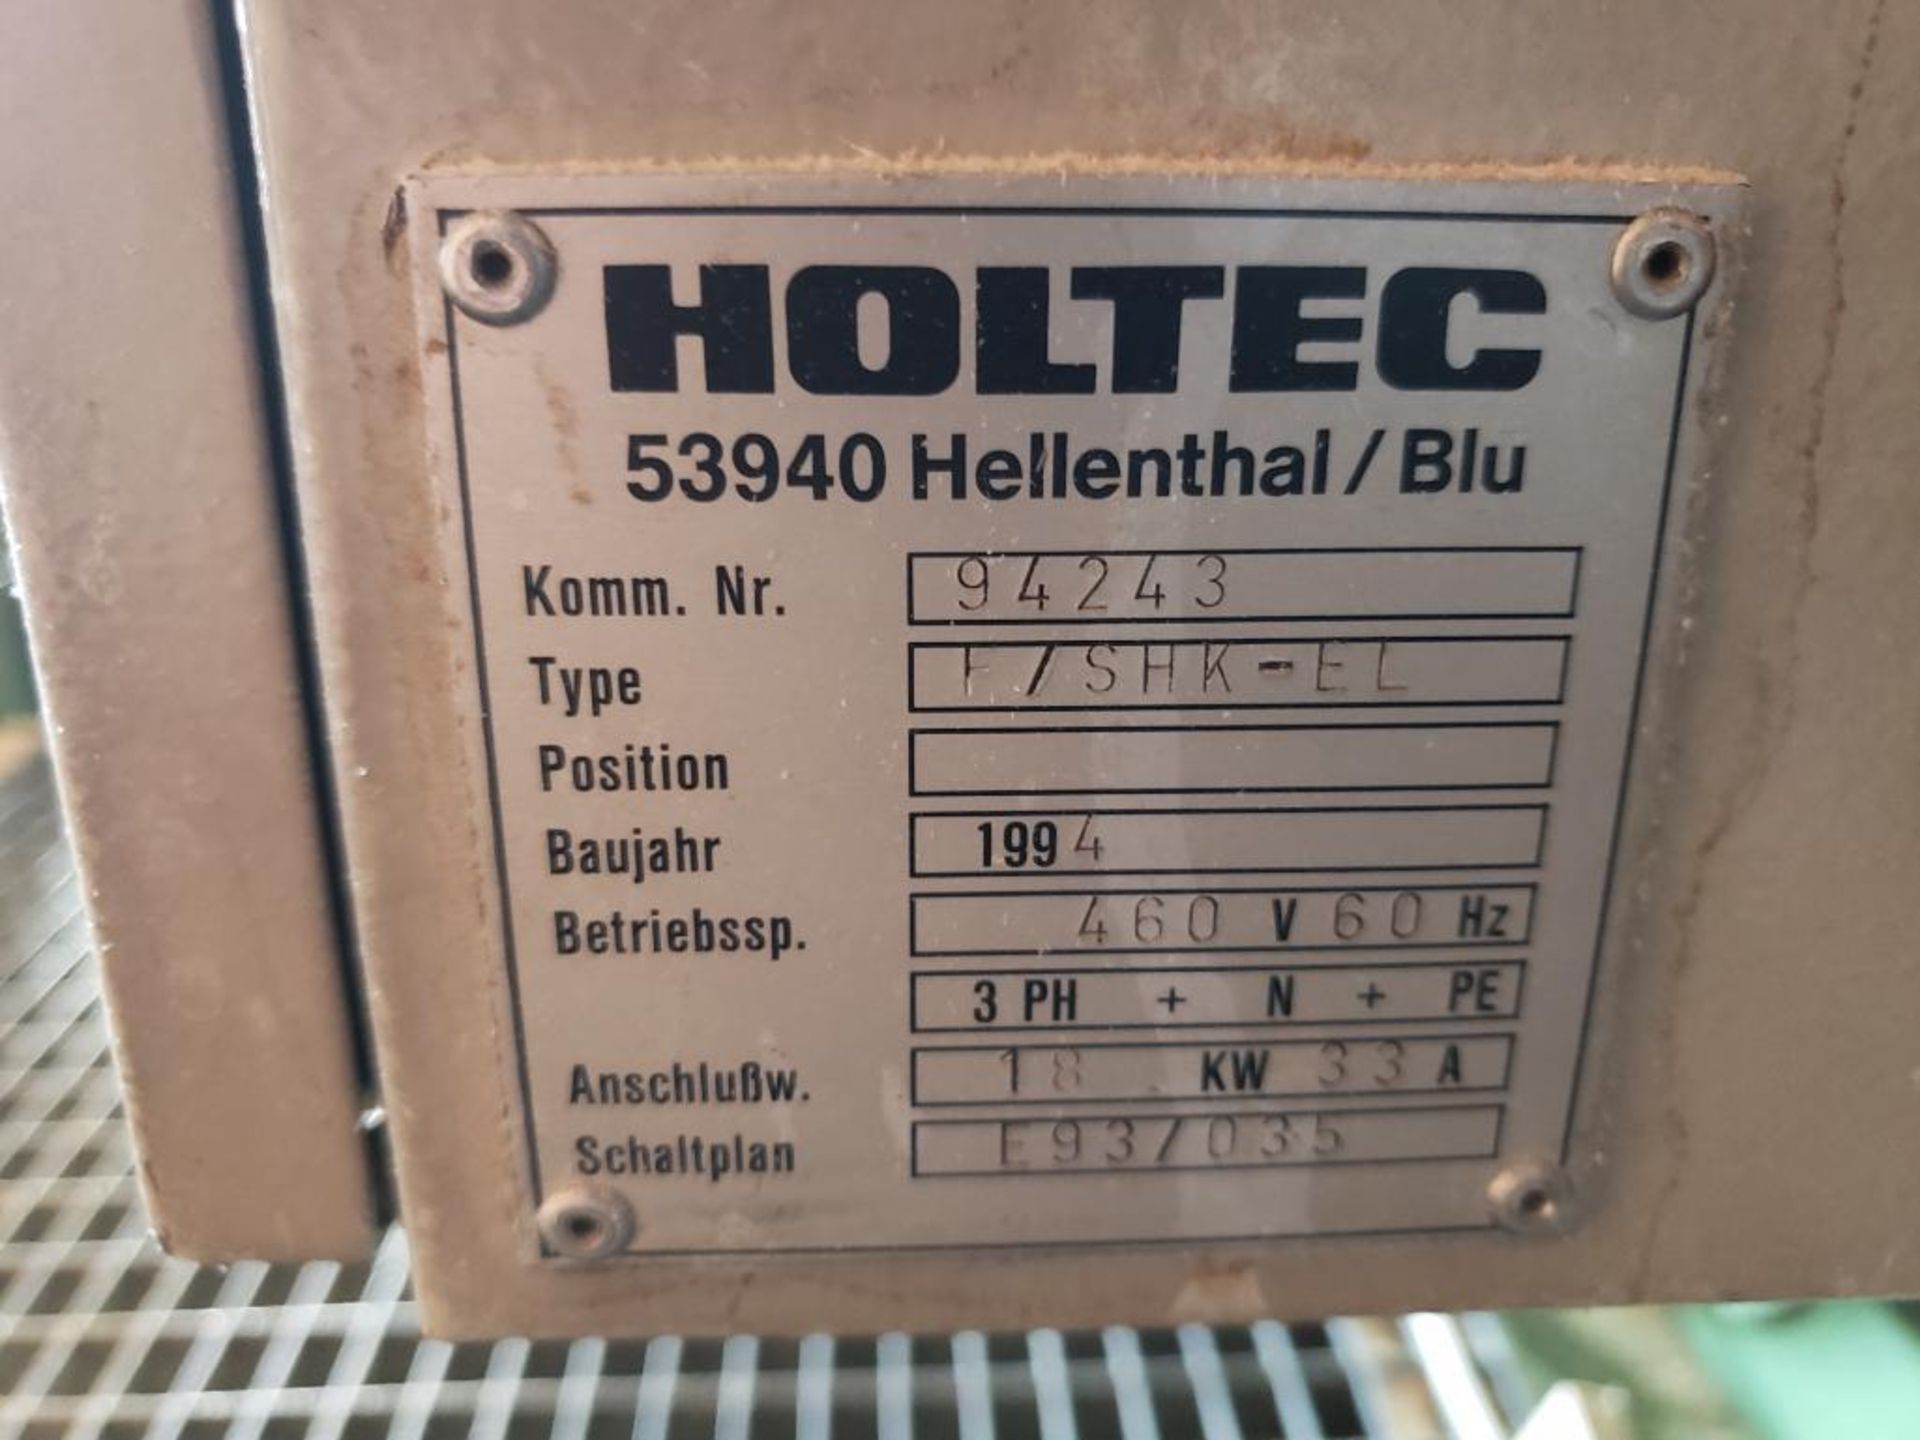 Holtec 94243 F/SHK-EL crosscut saw. 3PH, 460V. - Image 15 of 34